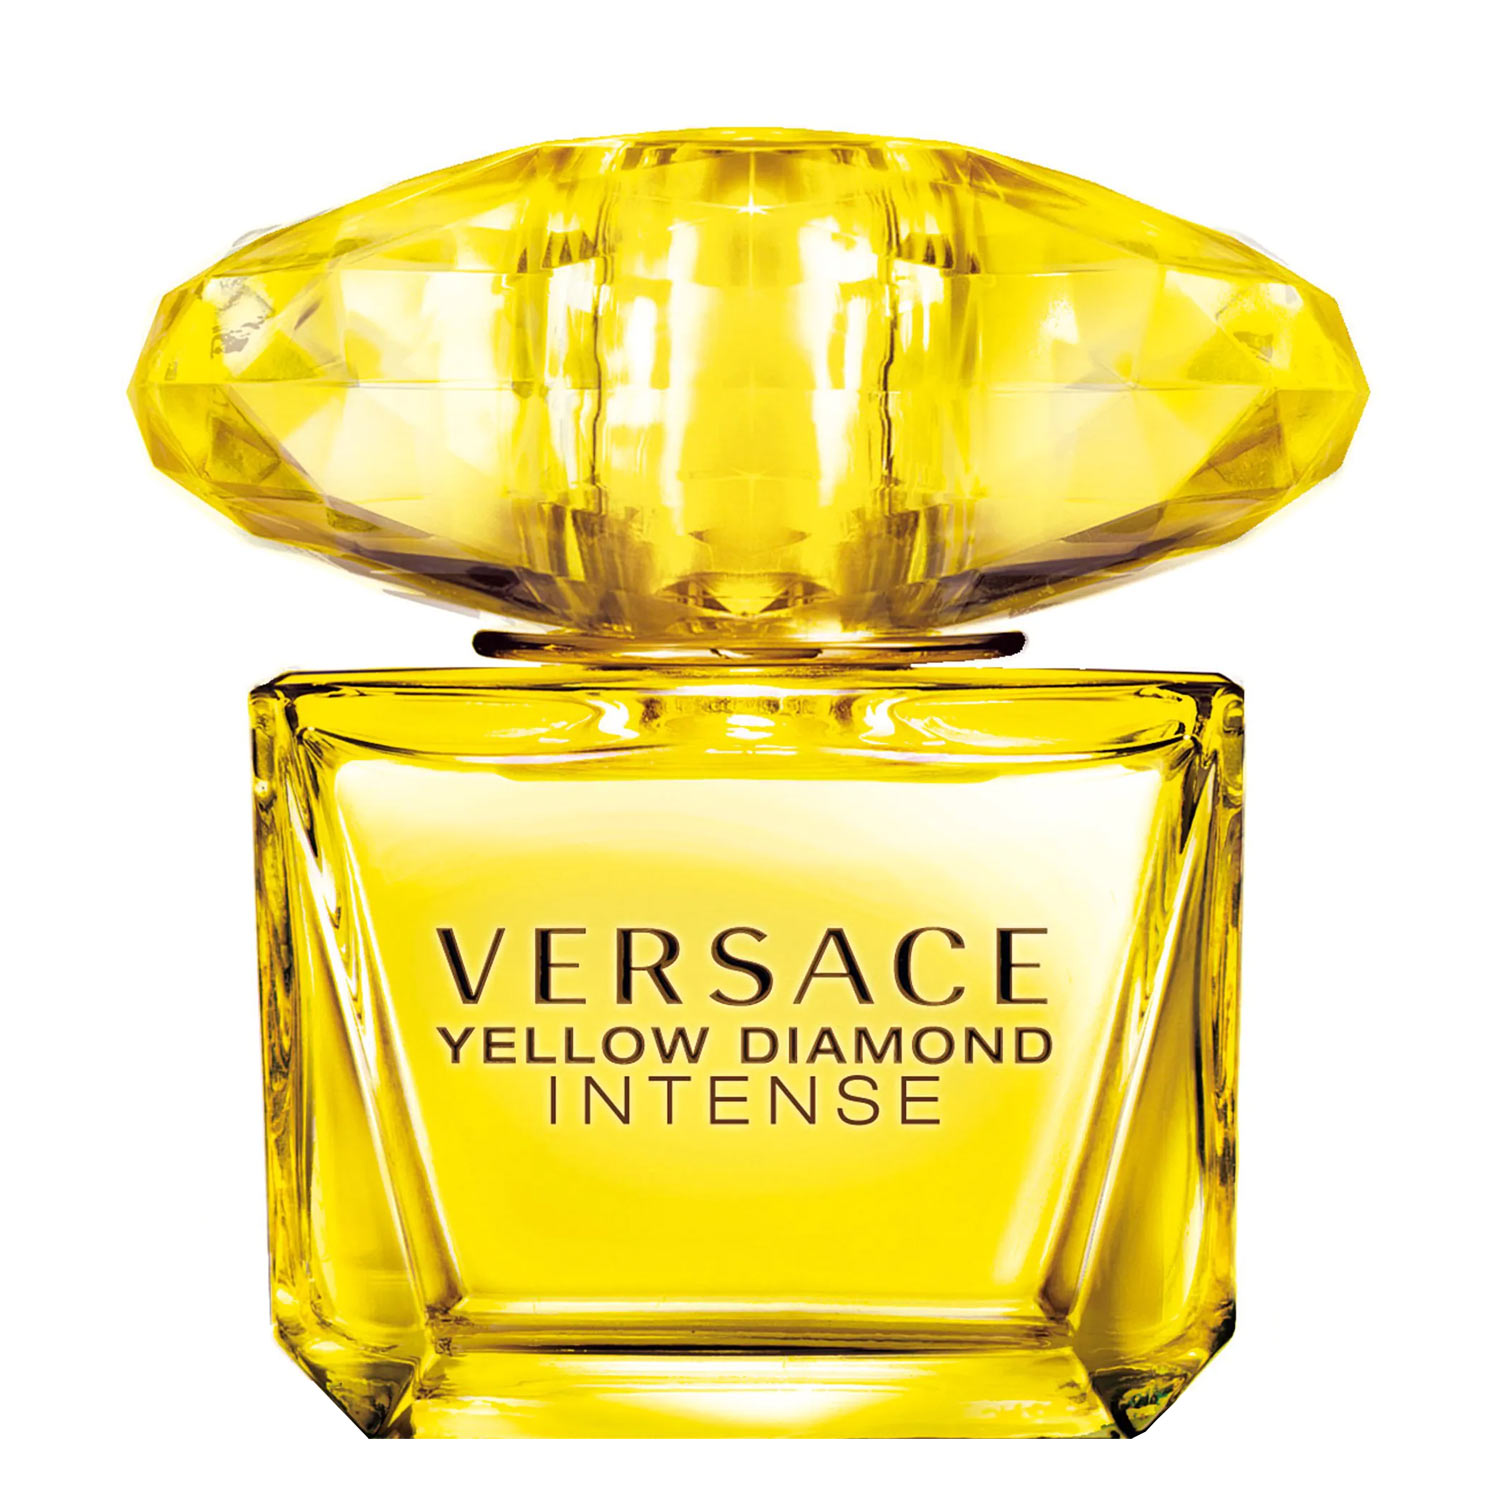 Yellow Diamond Intense Versace Image